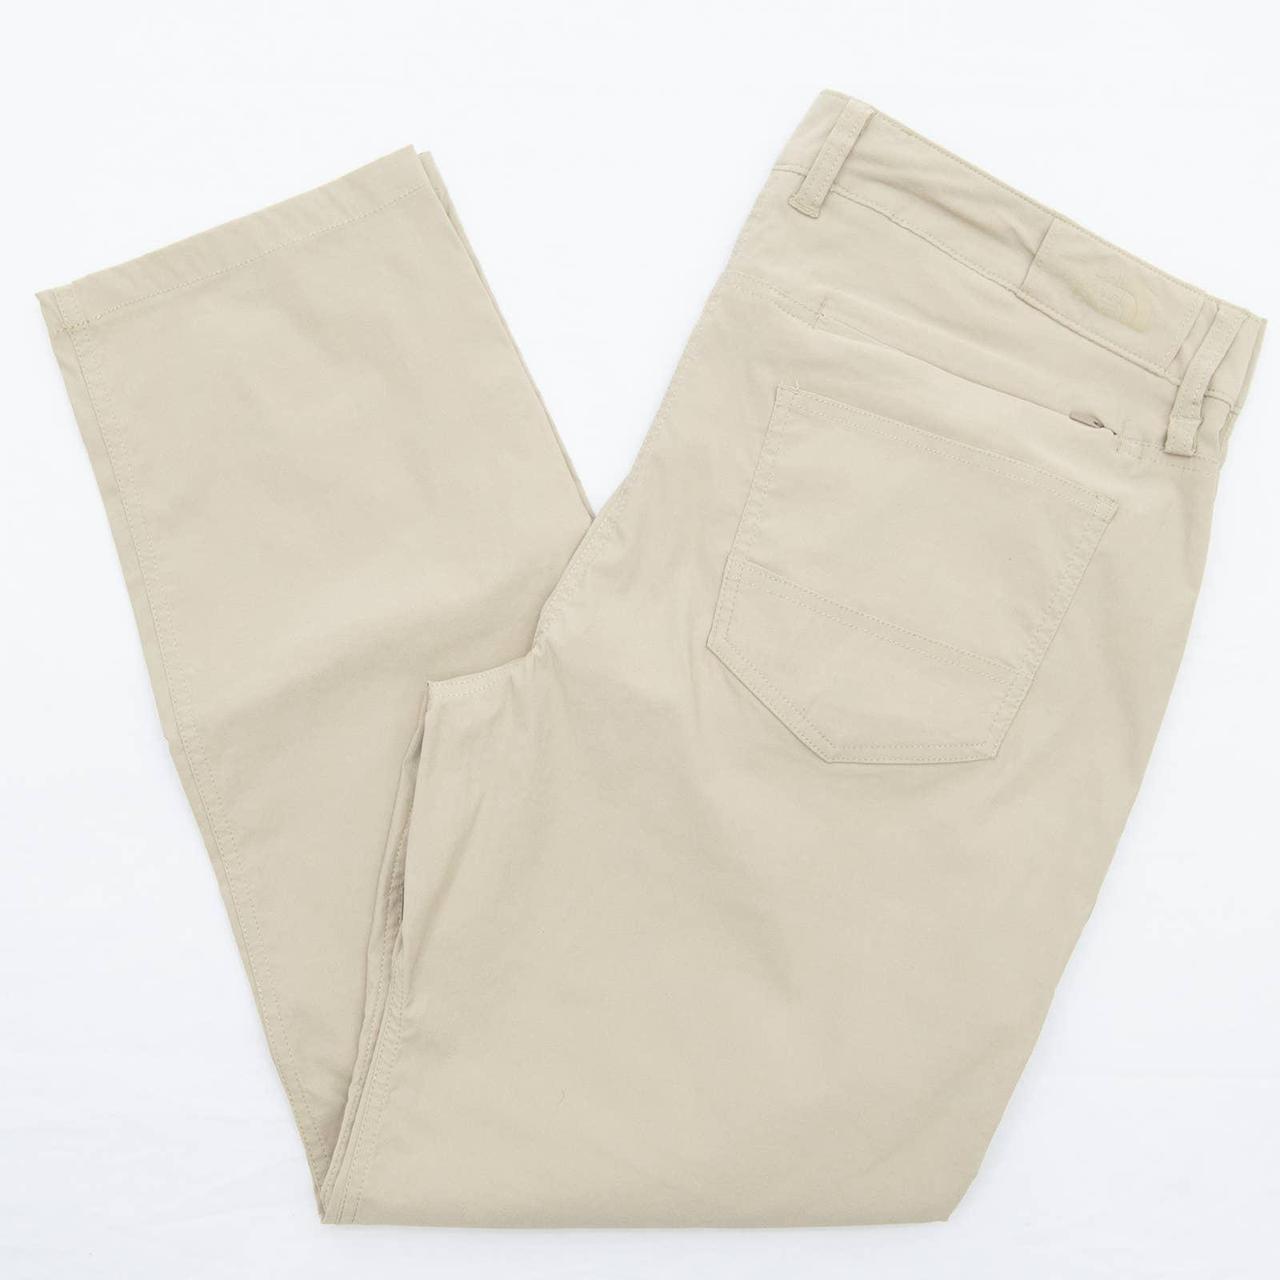 The North Face Men's Sprag 5-Pocket Pants